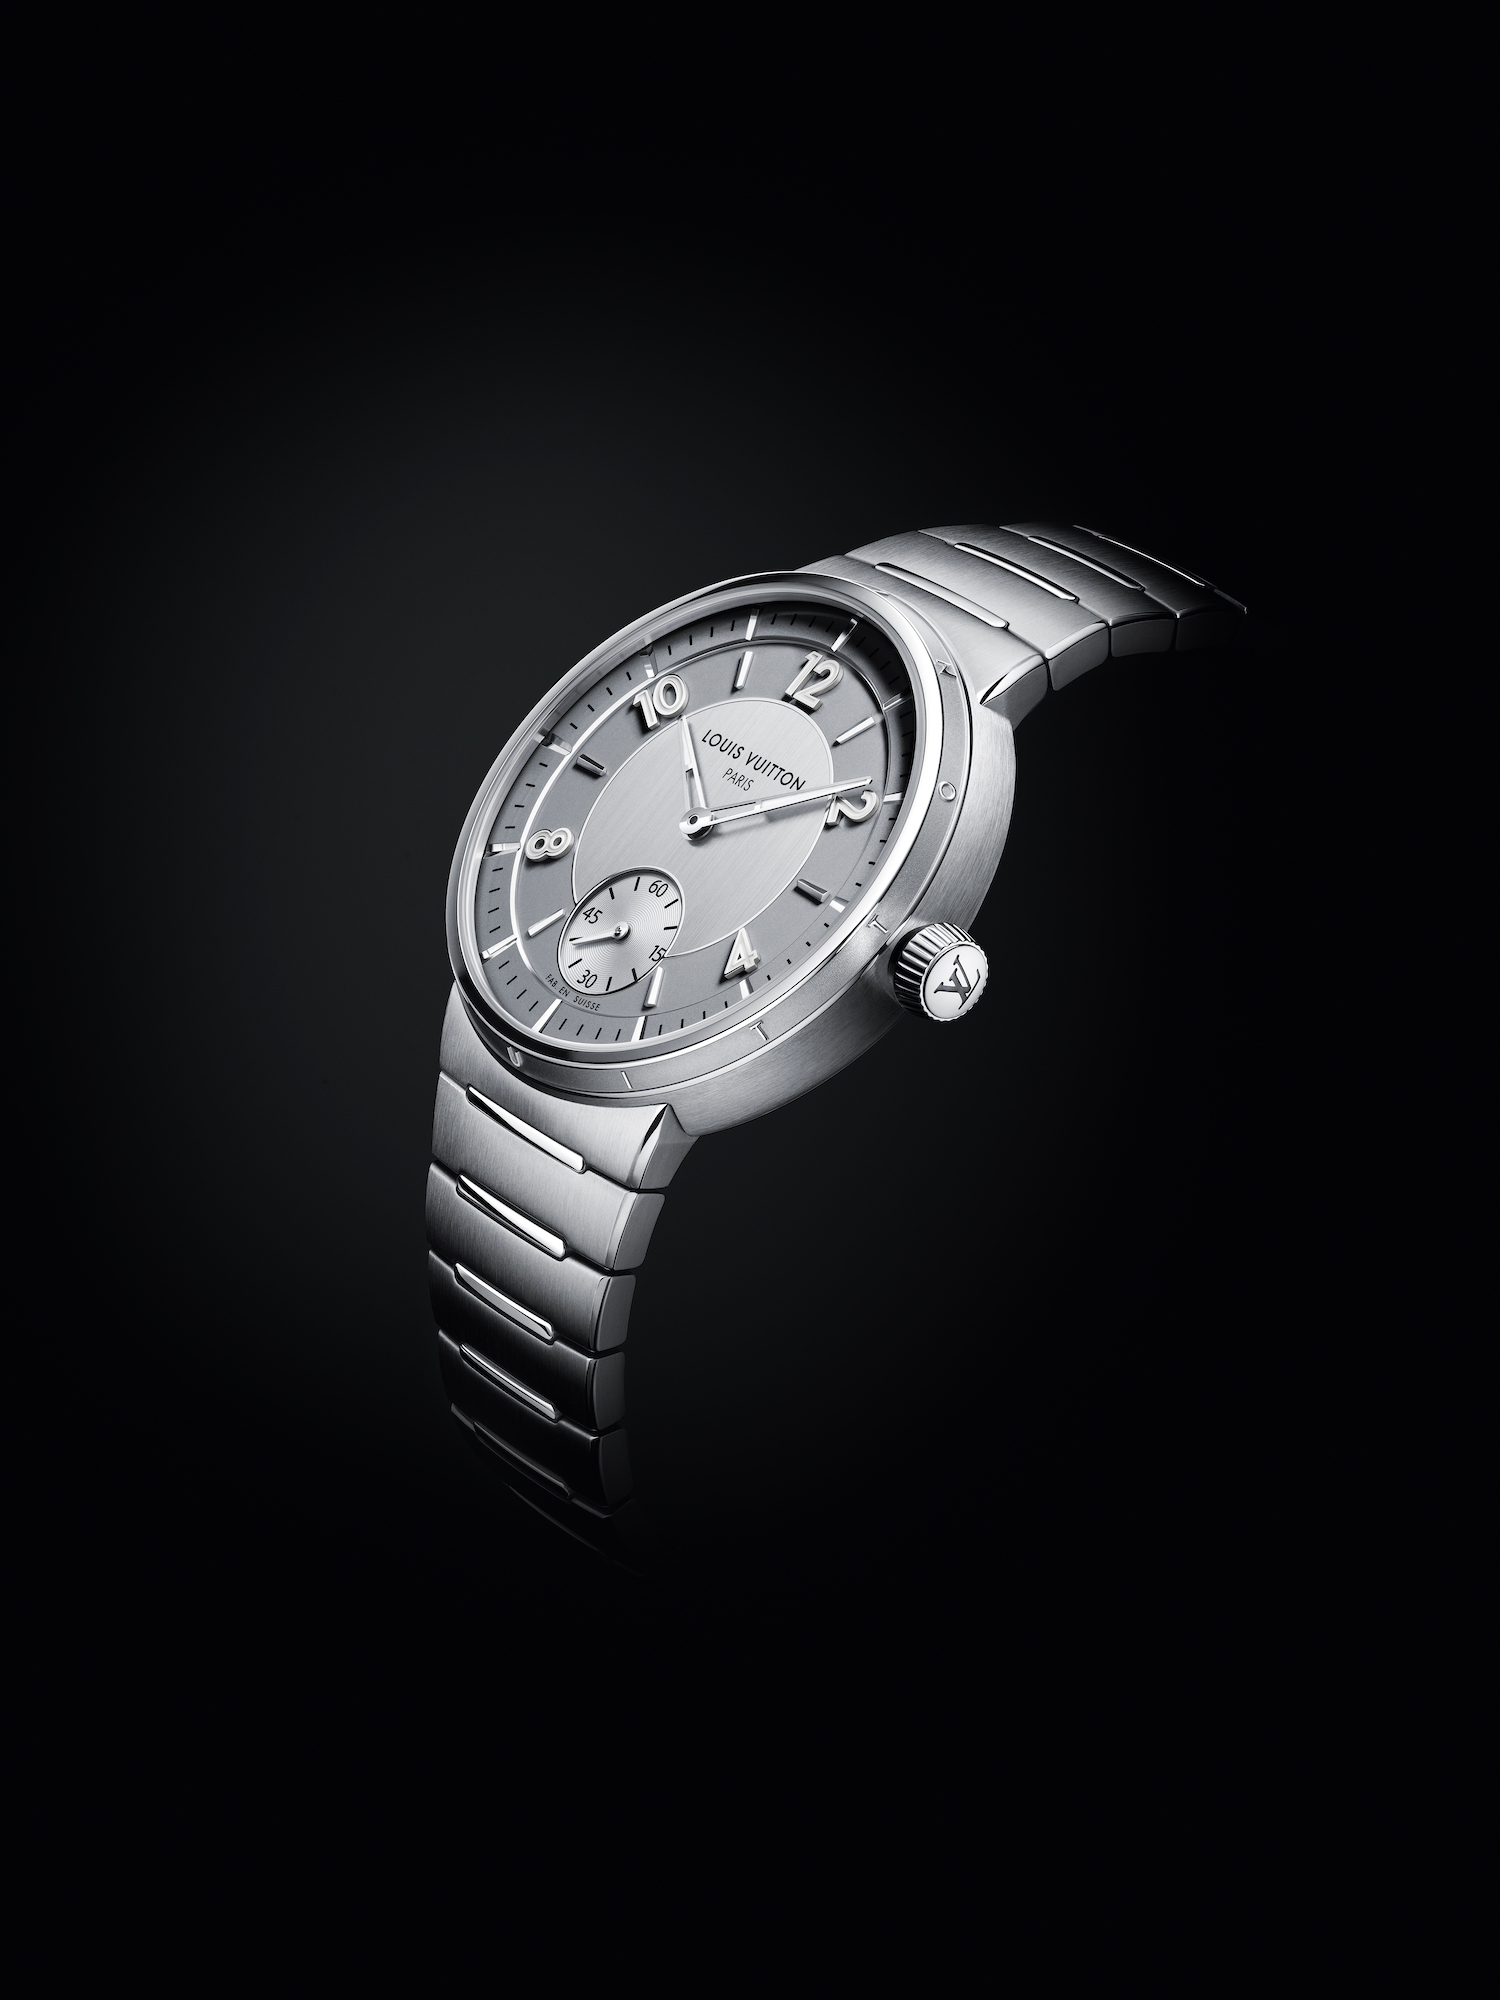 Louis Vuitton Tambour watch